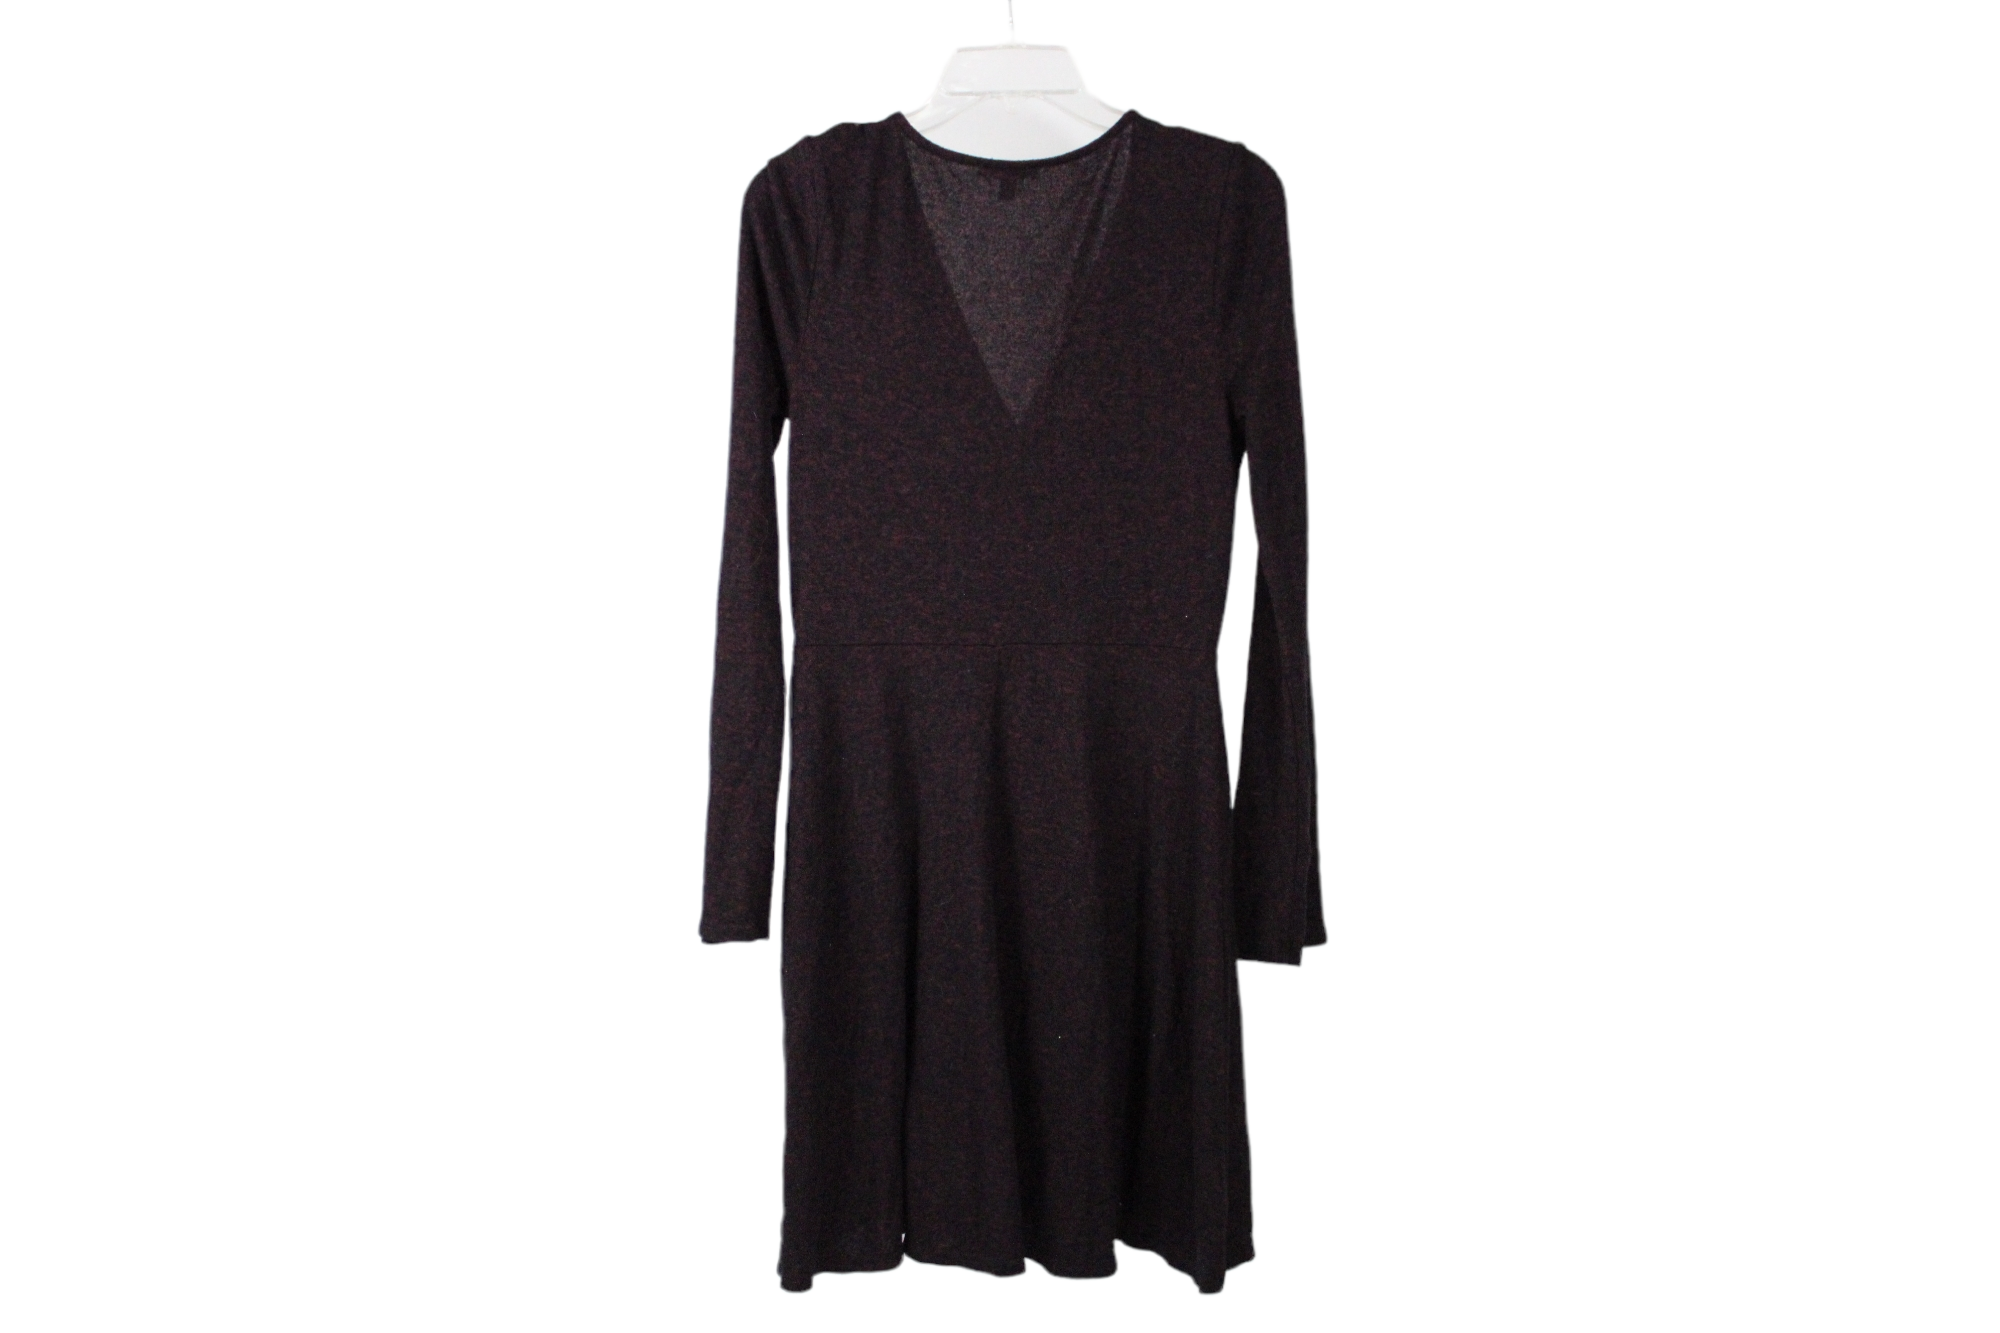 Express Burgundy Knit Dress | M